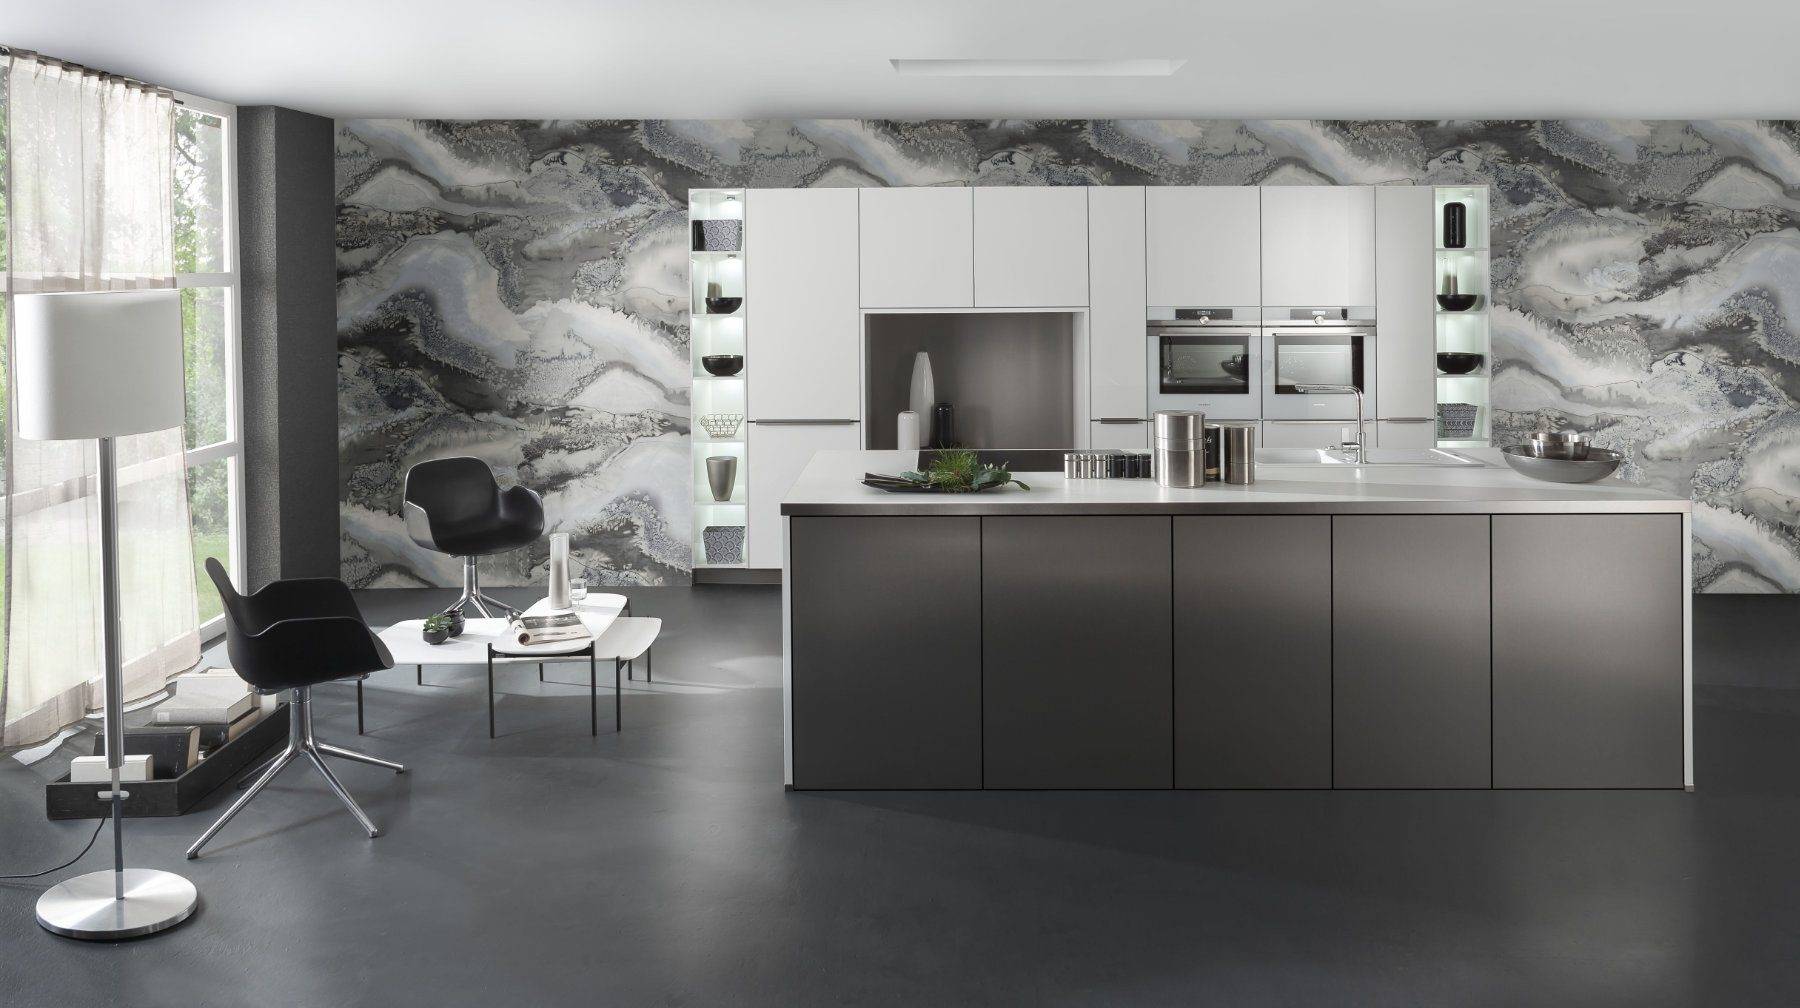 Bauformat Matt White Metallic Effect Kitchen With Island | Romans Haus, Uxbridge